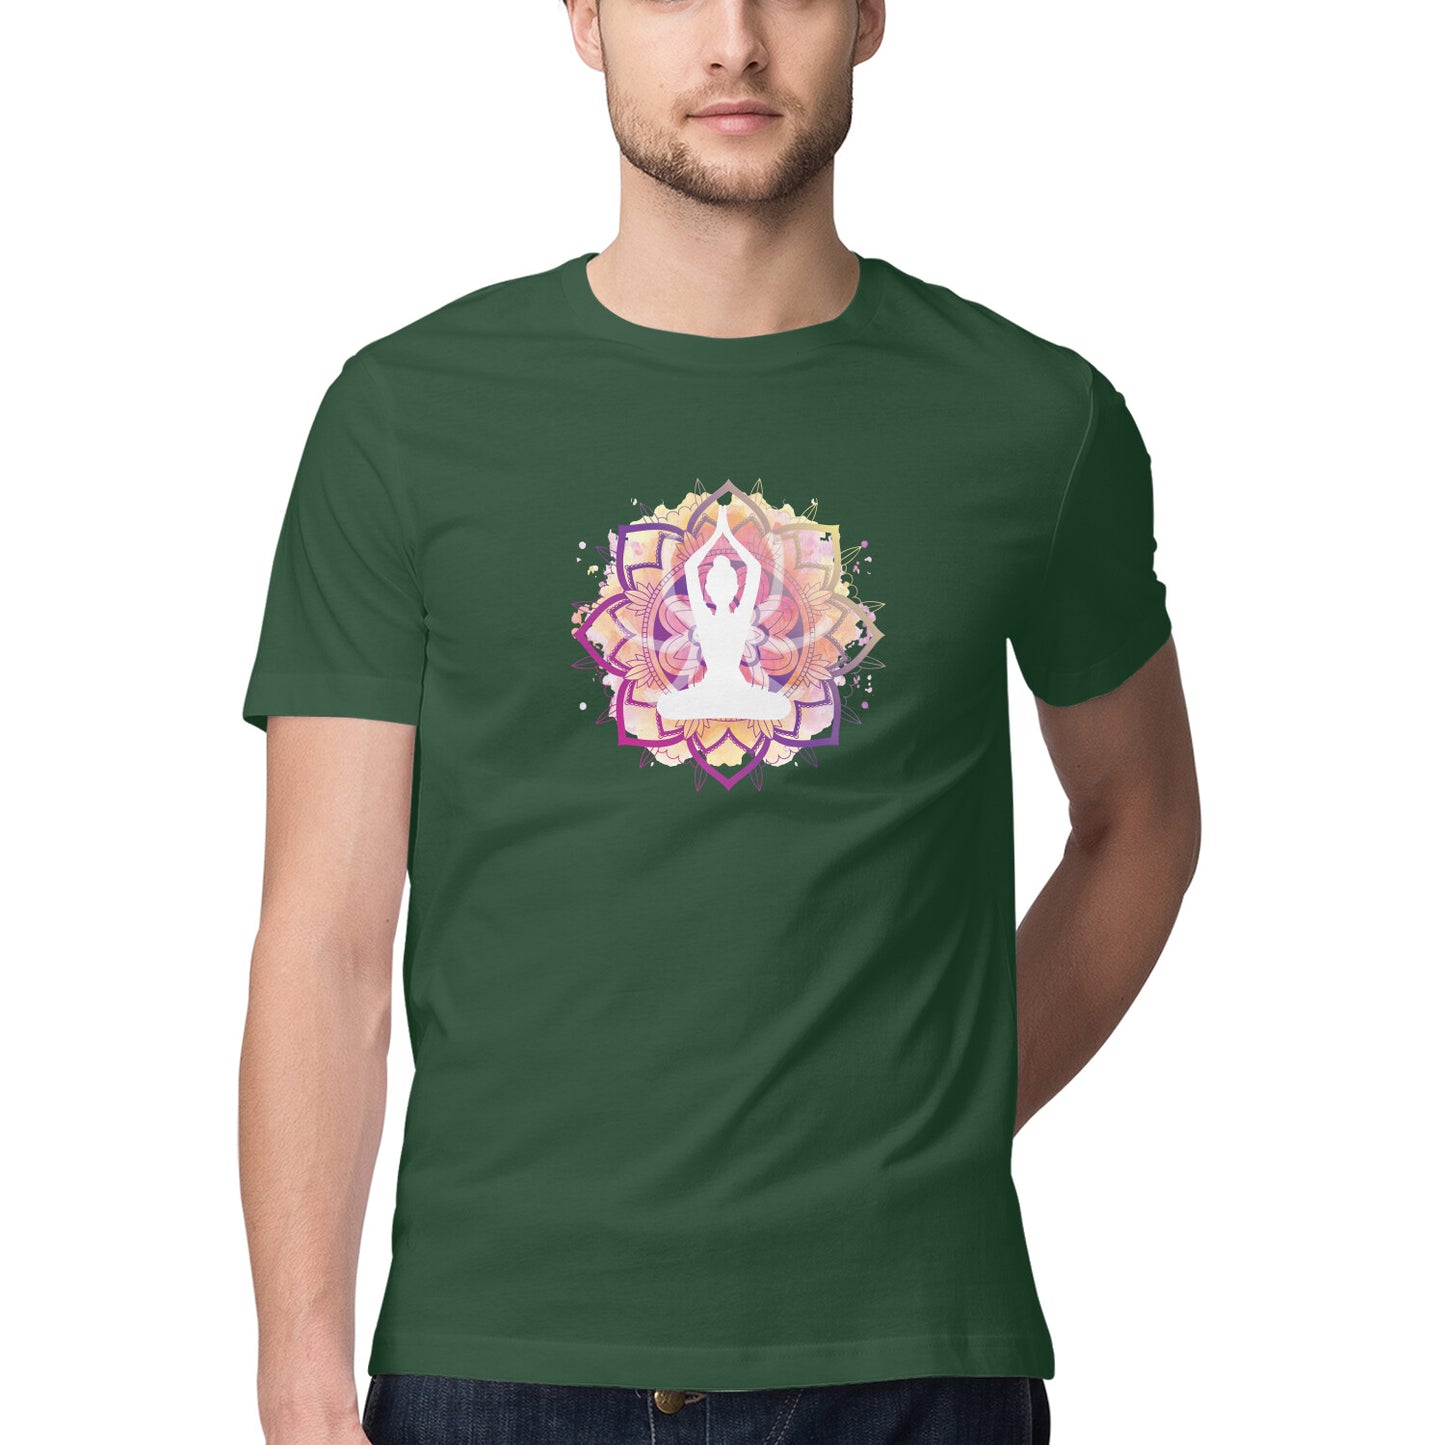 Yoga and Meditation 18 Printed Graphic T-Shirt